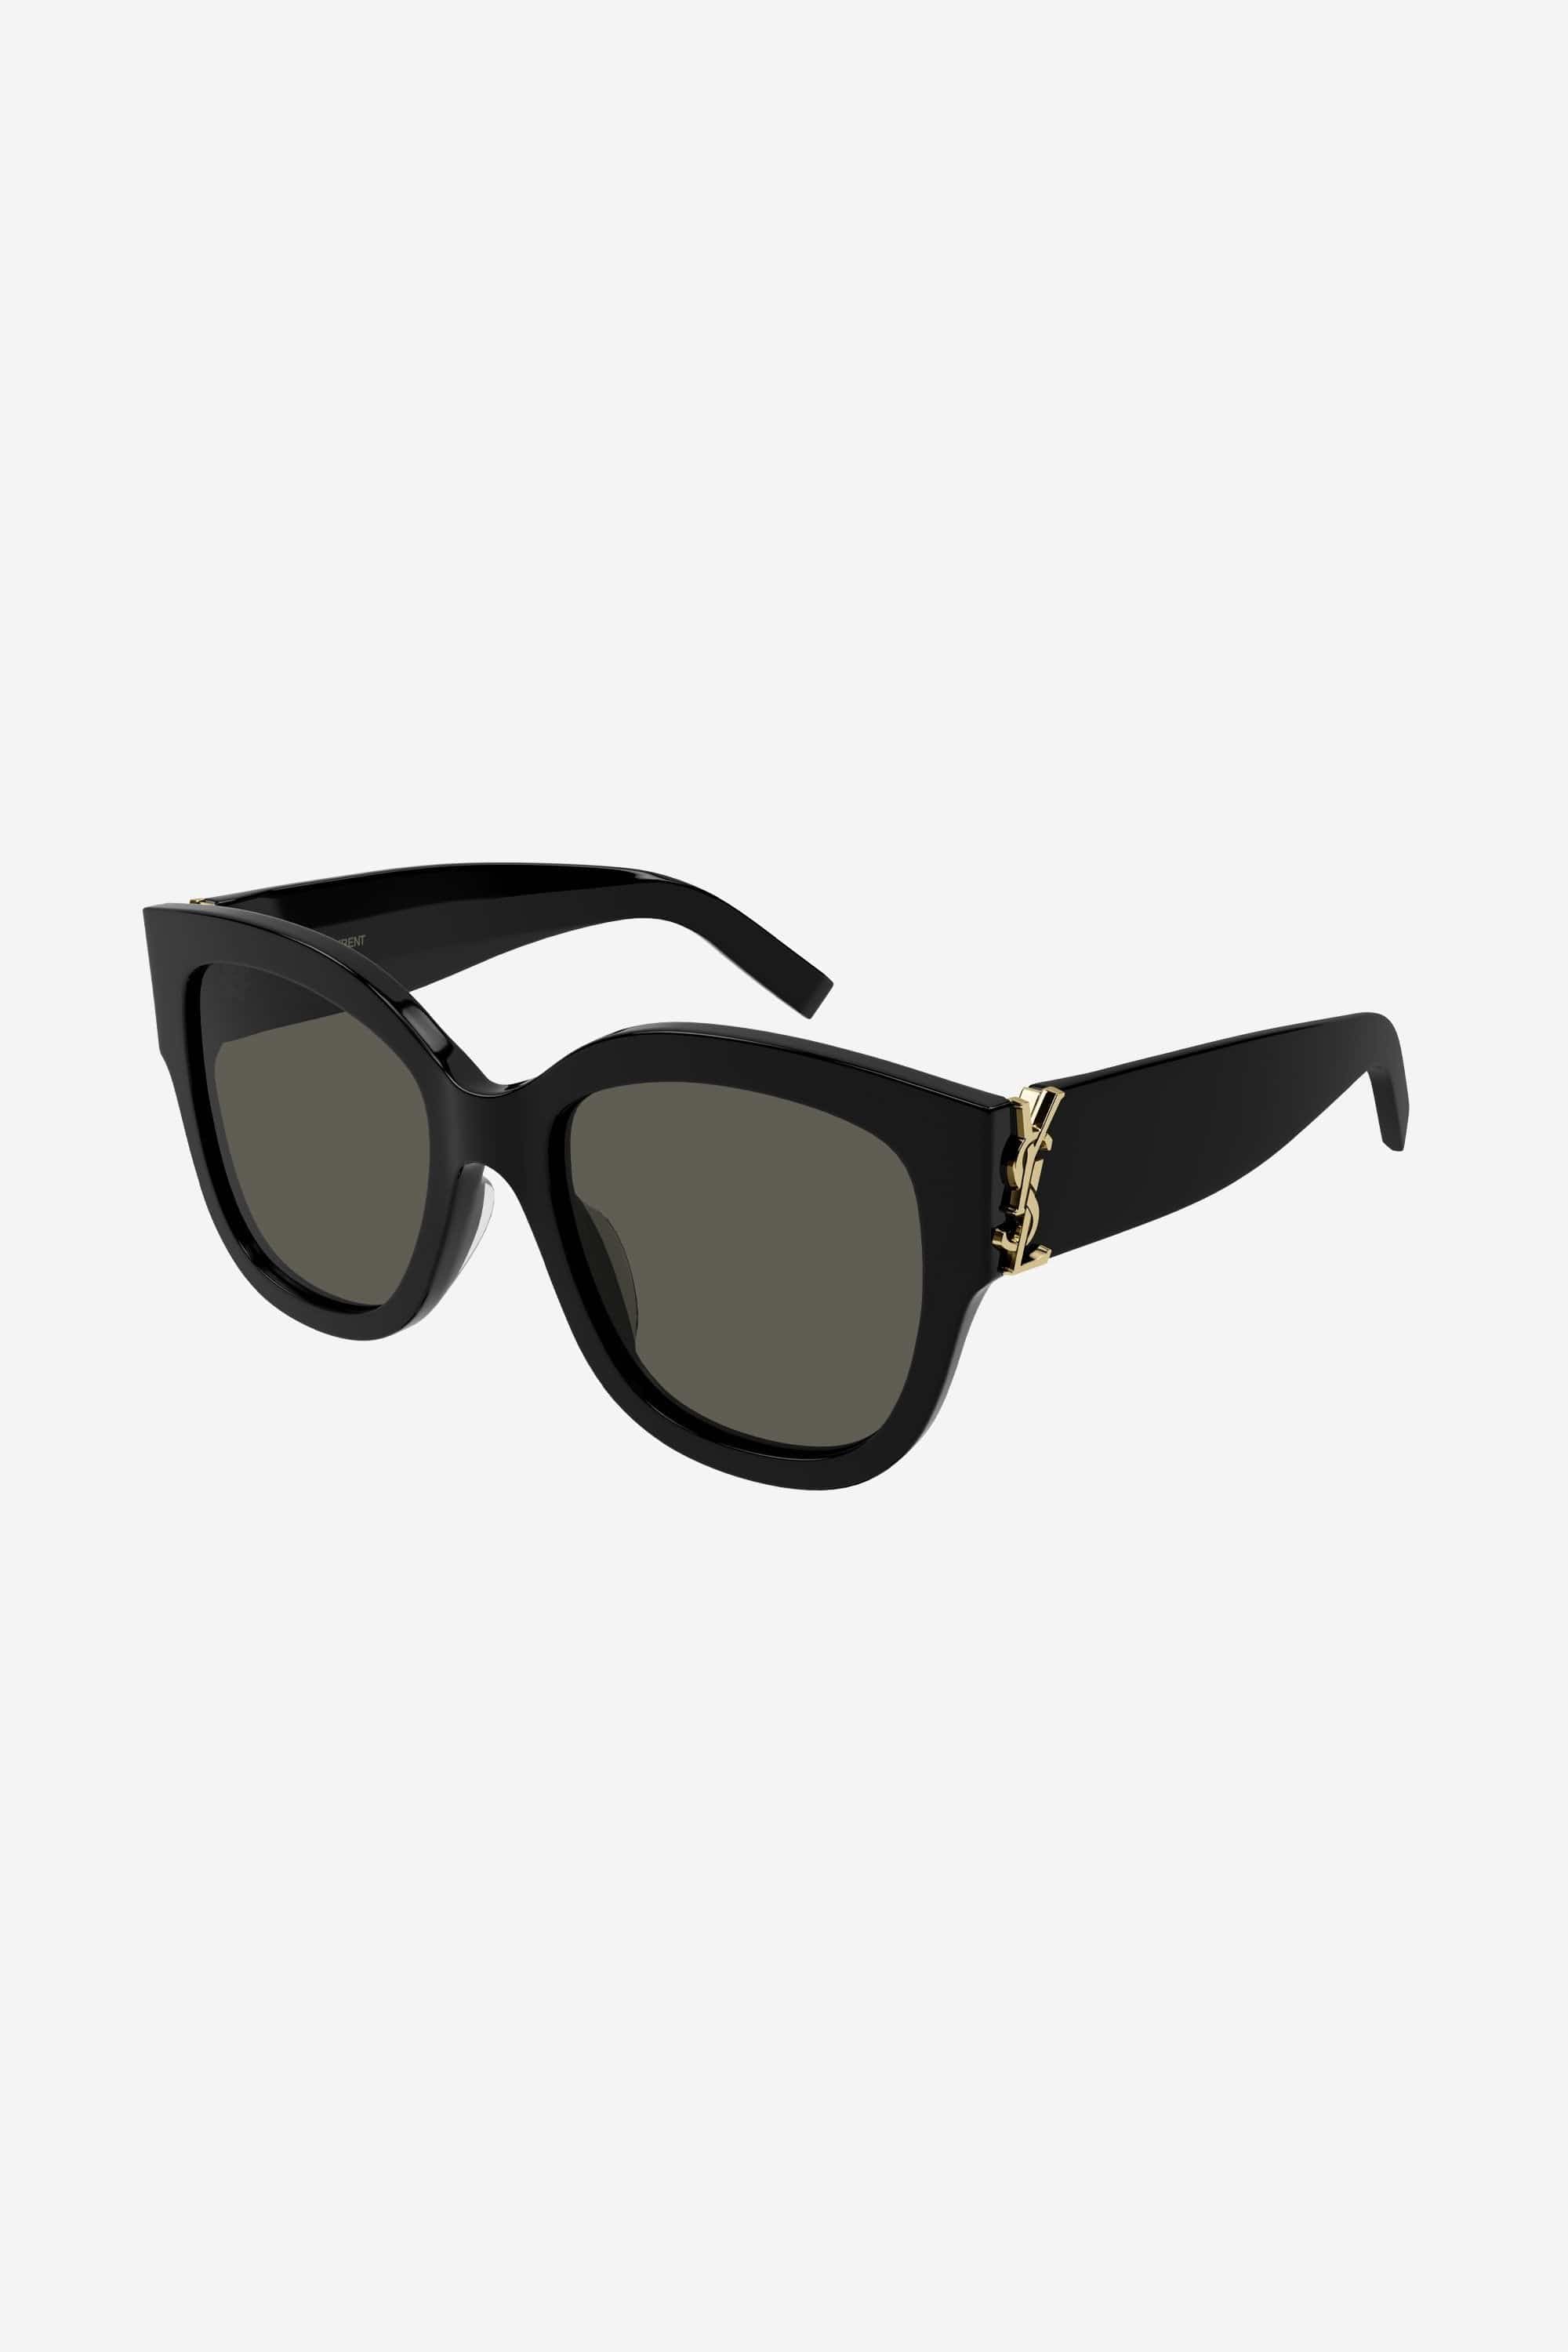 Saint Laurent SL M95 oversized black cat eye sunglasses - Eyewear Club